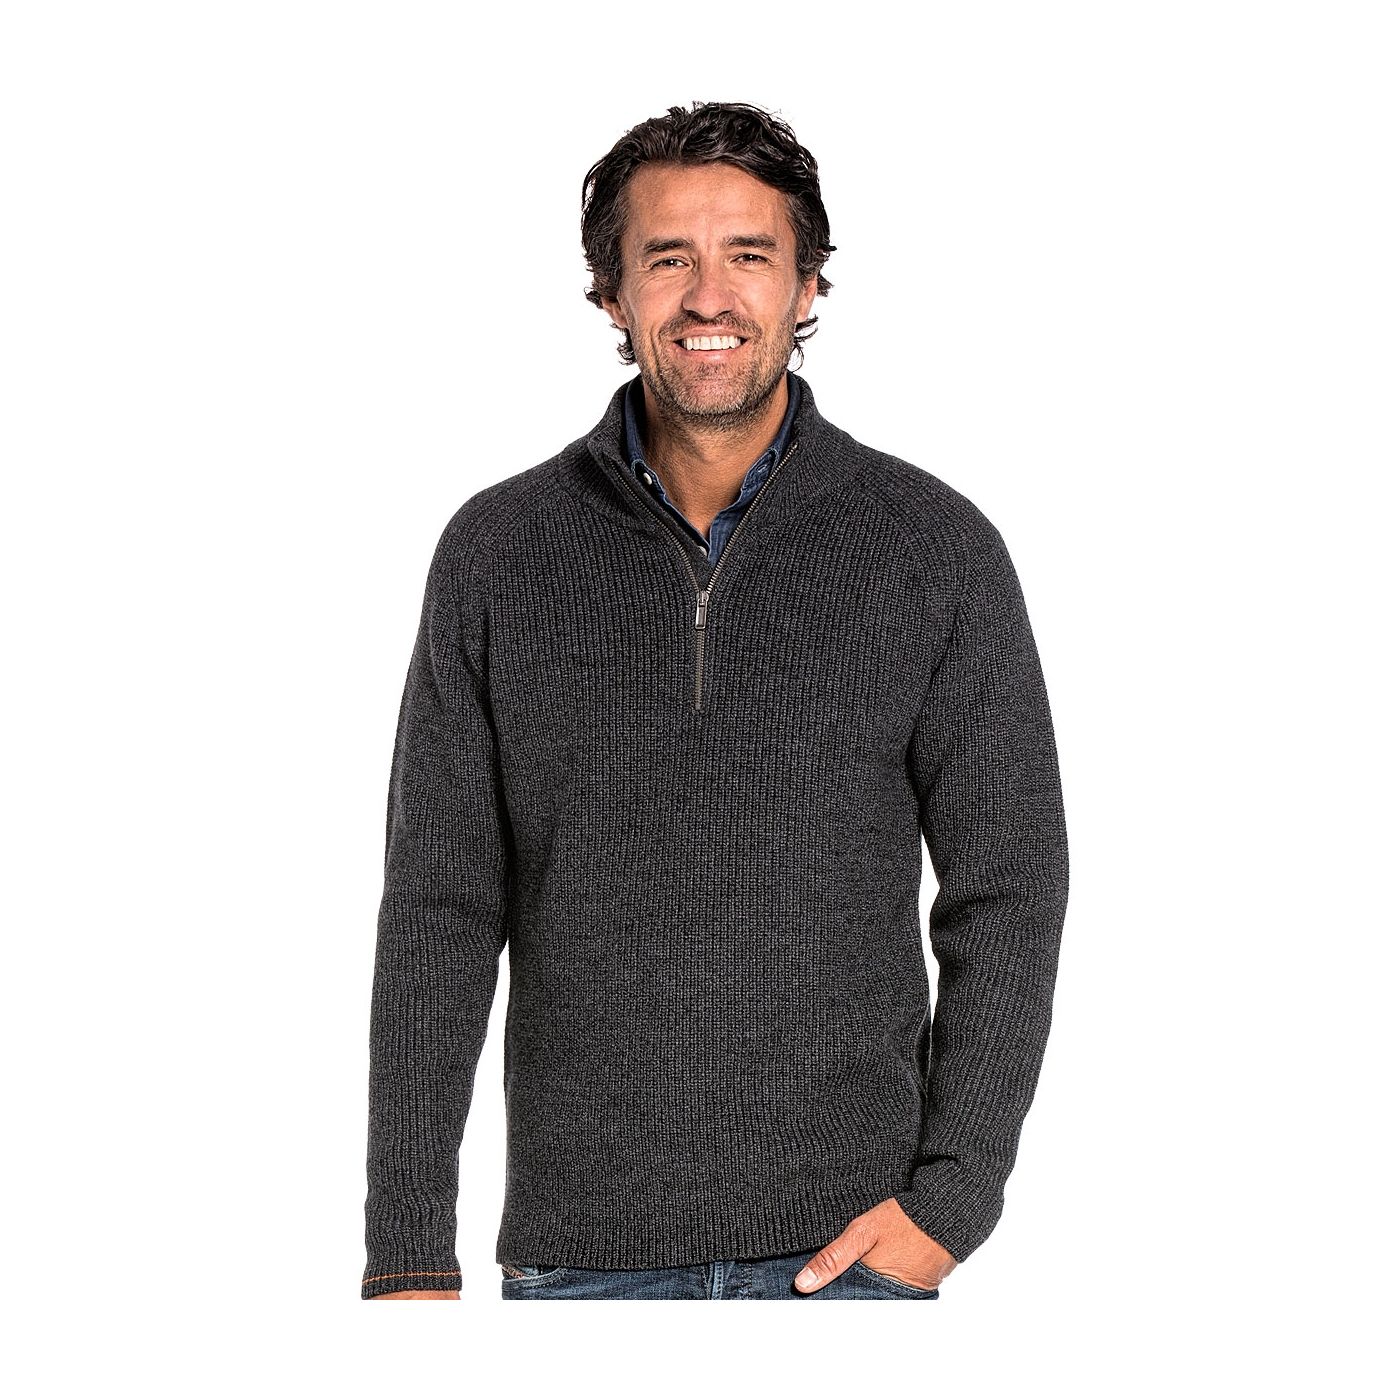 Fisherman sweater for men made of Merino wool in Dark grey